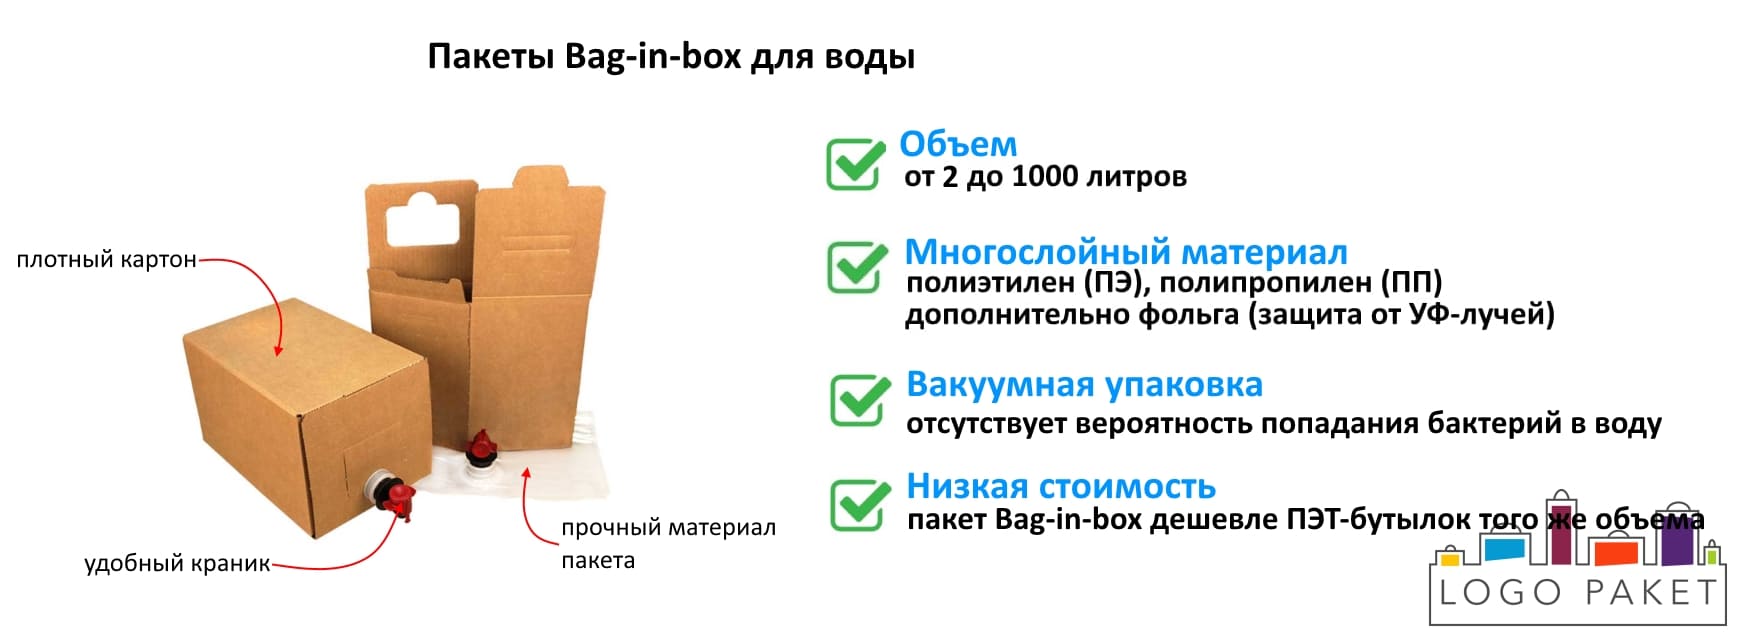 Пакеты Bag-in-box для воды